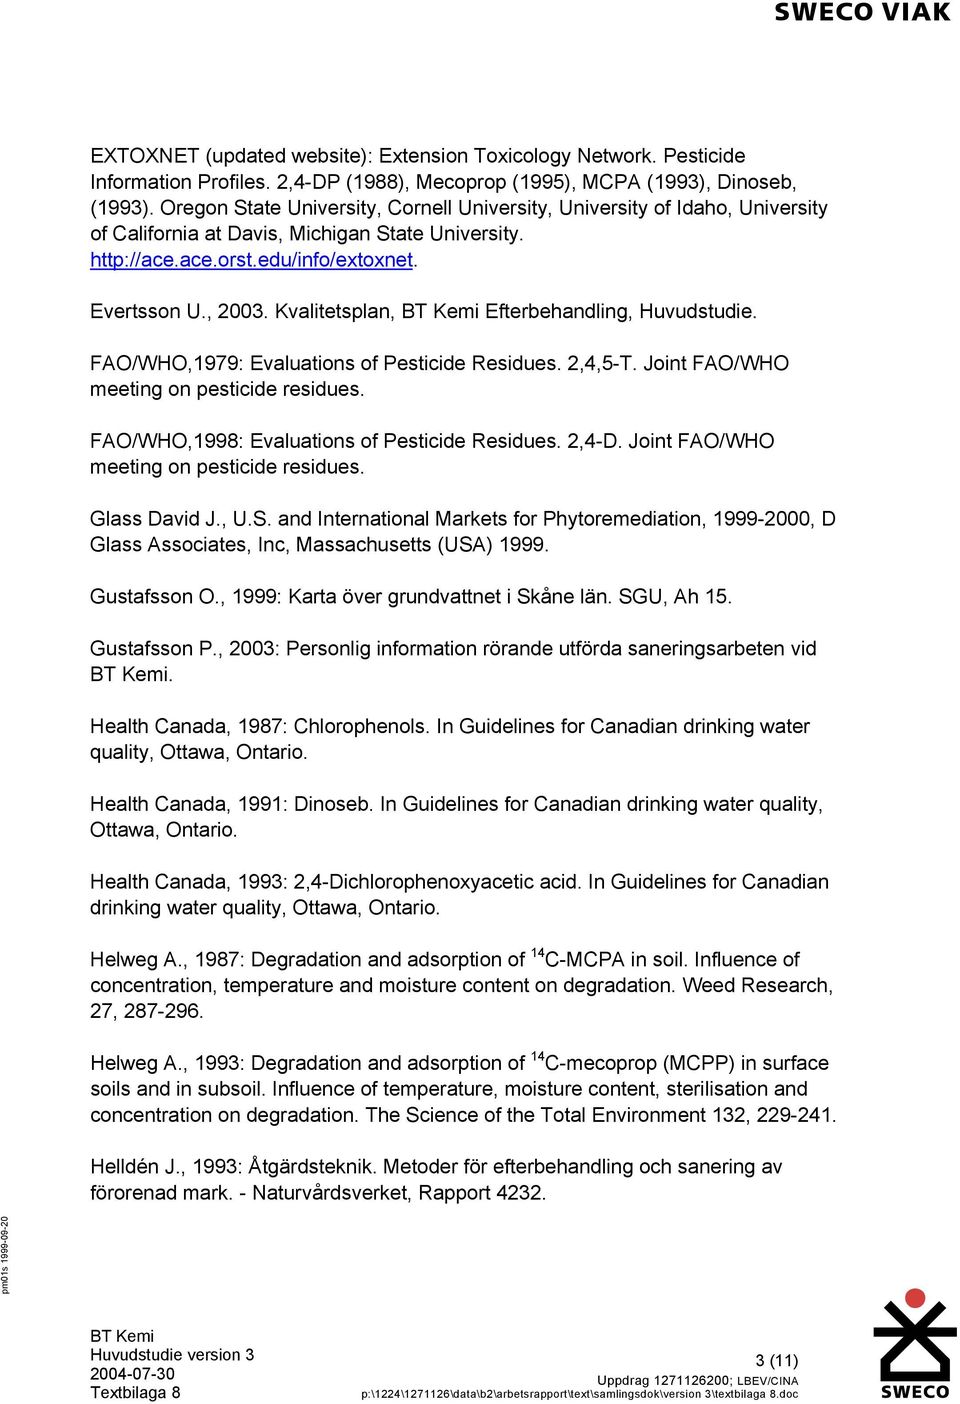 Kvalitetsplan, Efterbehandling, Huvudstudie. FAO/WHO,1979: Evaluations of Pesticide Residues. 2,4,5-T. Joint FAO/WHO meeting on pesticide residues. FAO/WHO,1998: Evaluations of Pesticide Residues.